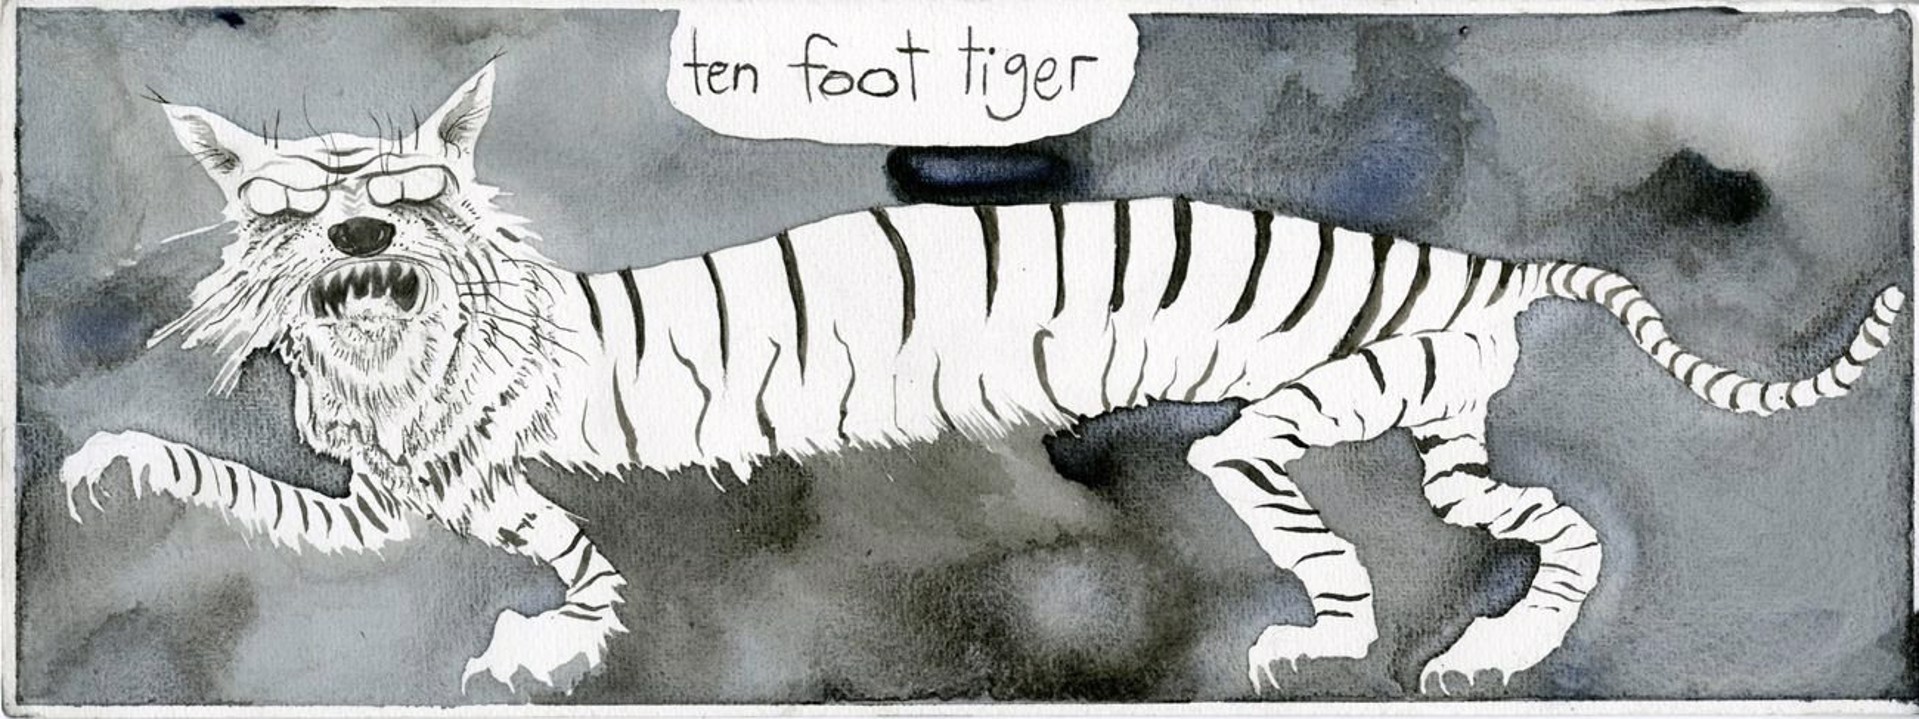 Ten Foot Tiger by Jim Holyoak